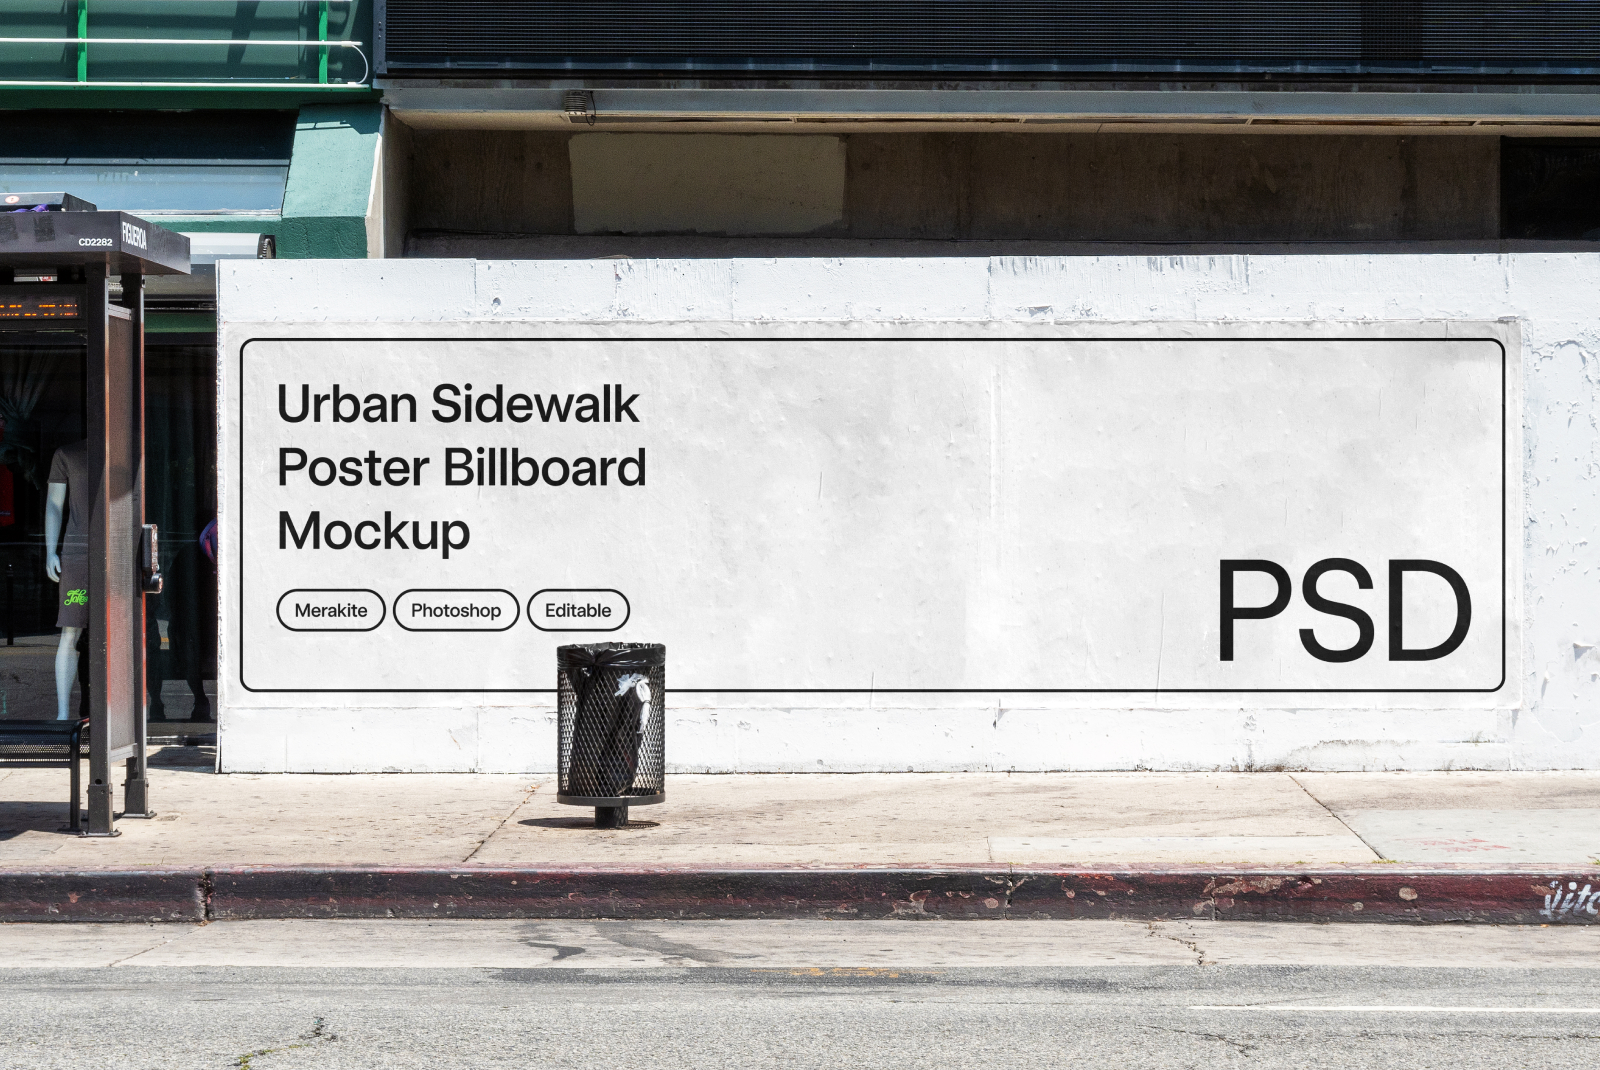 Editable urban sidewalk poster billboard mockup in PSD format for outdoor advertising design presentation.